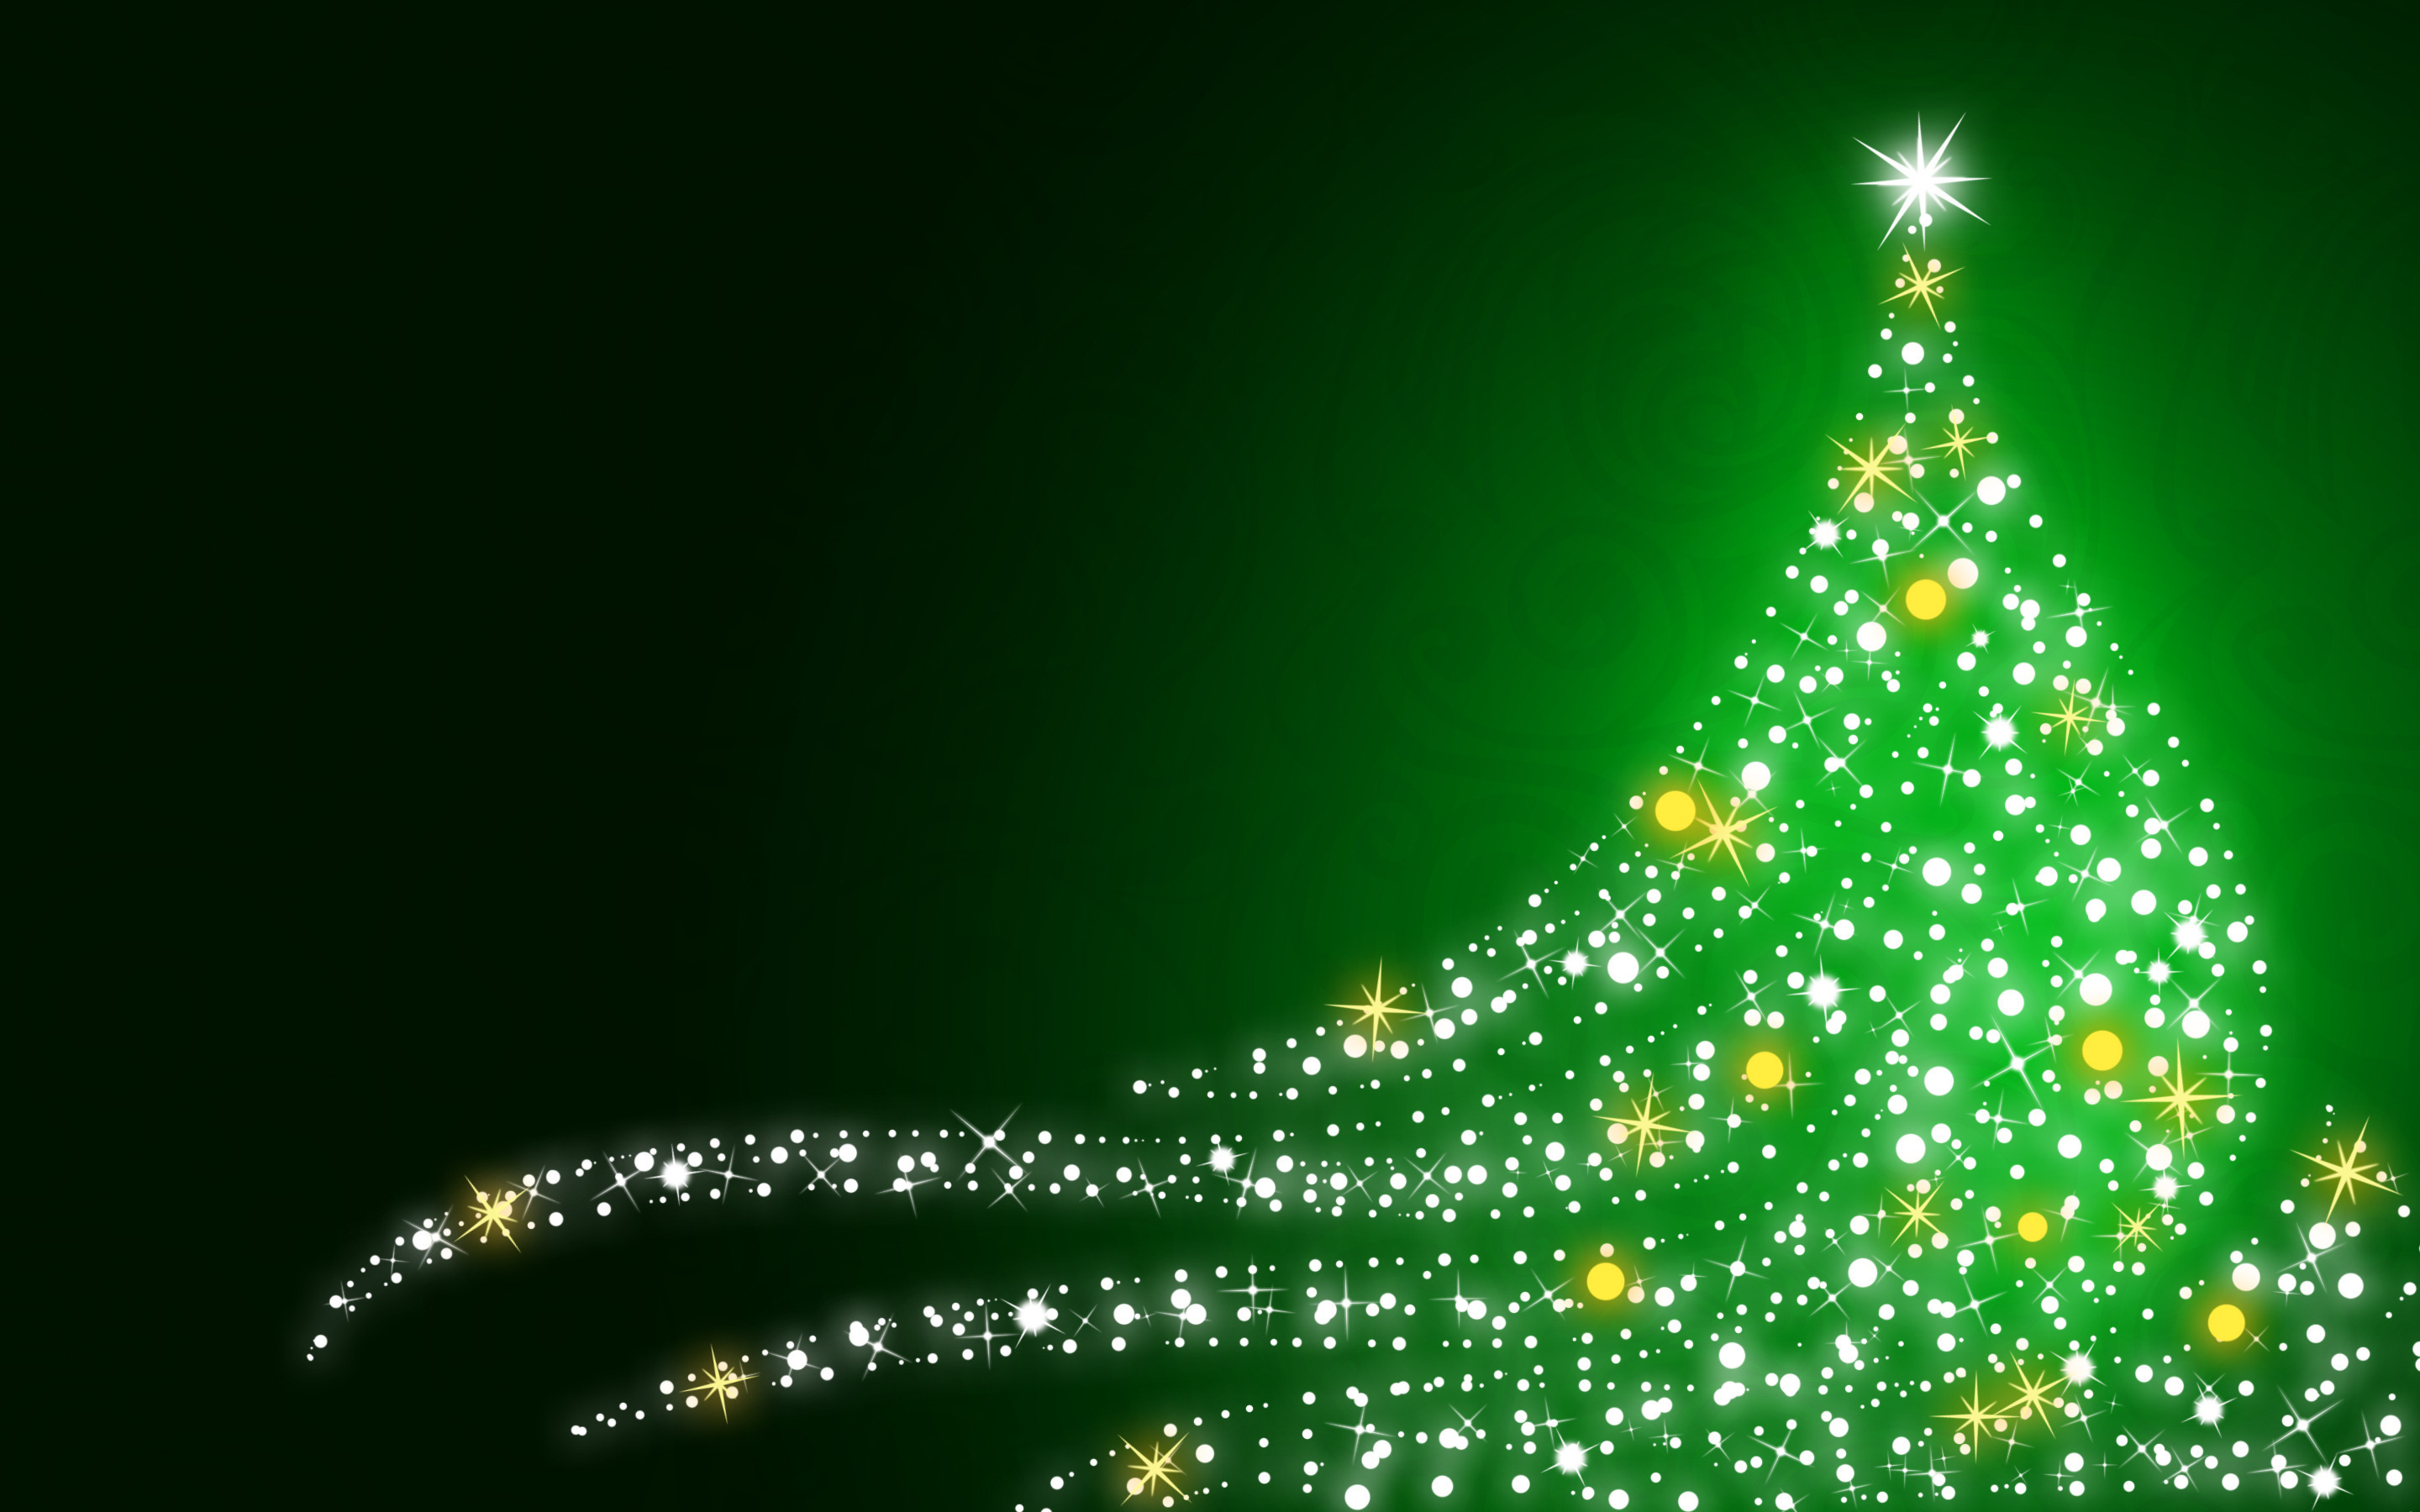 Shimmering Christmas Tree On Green Background Wallpaper